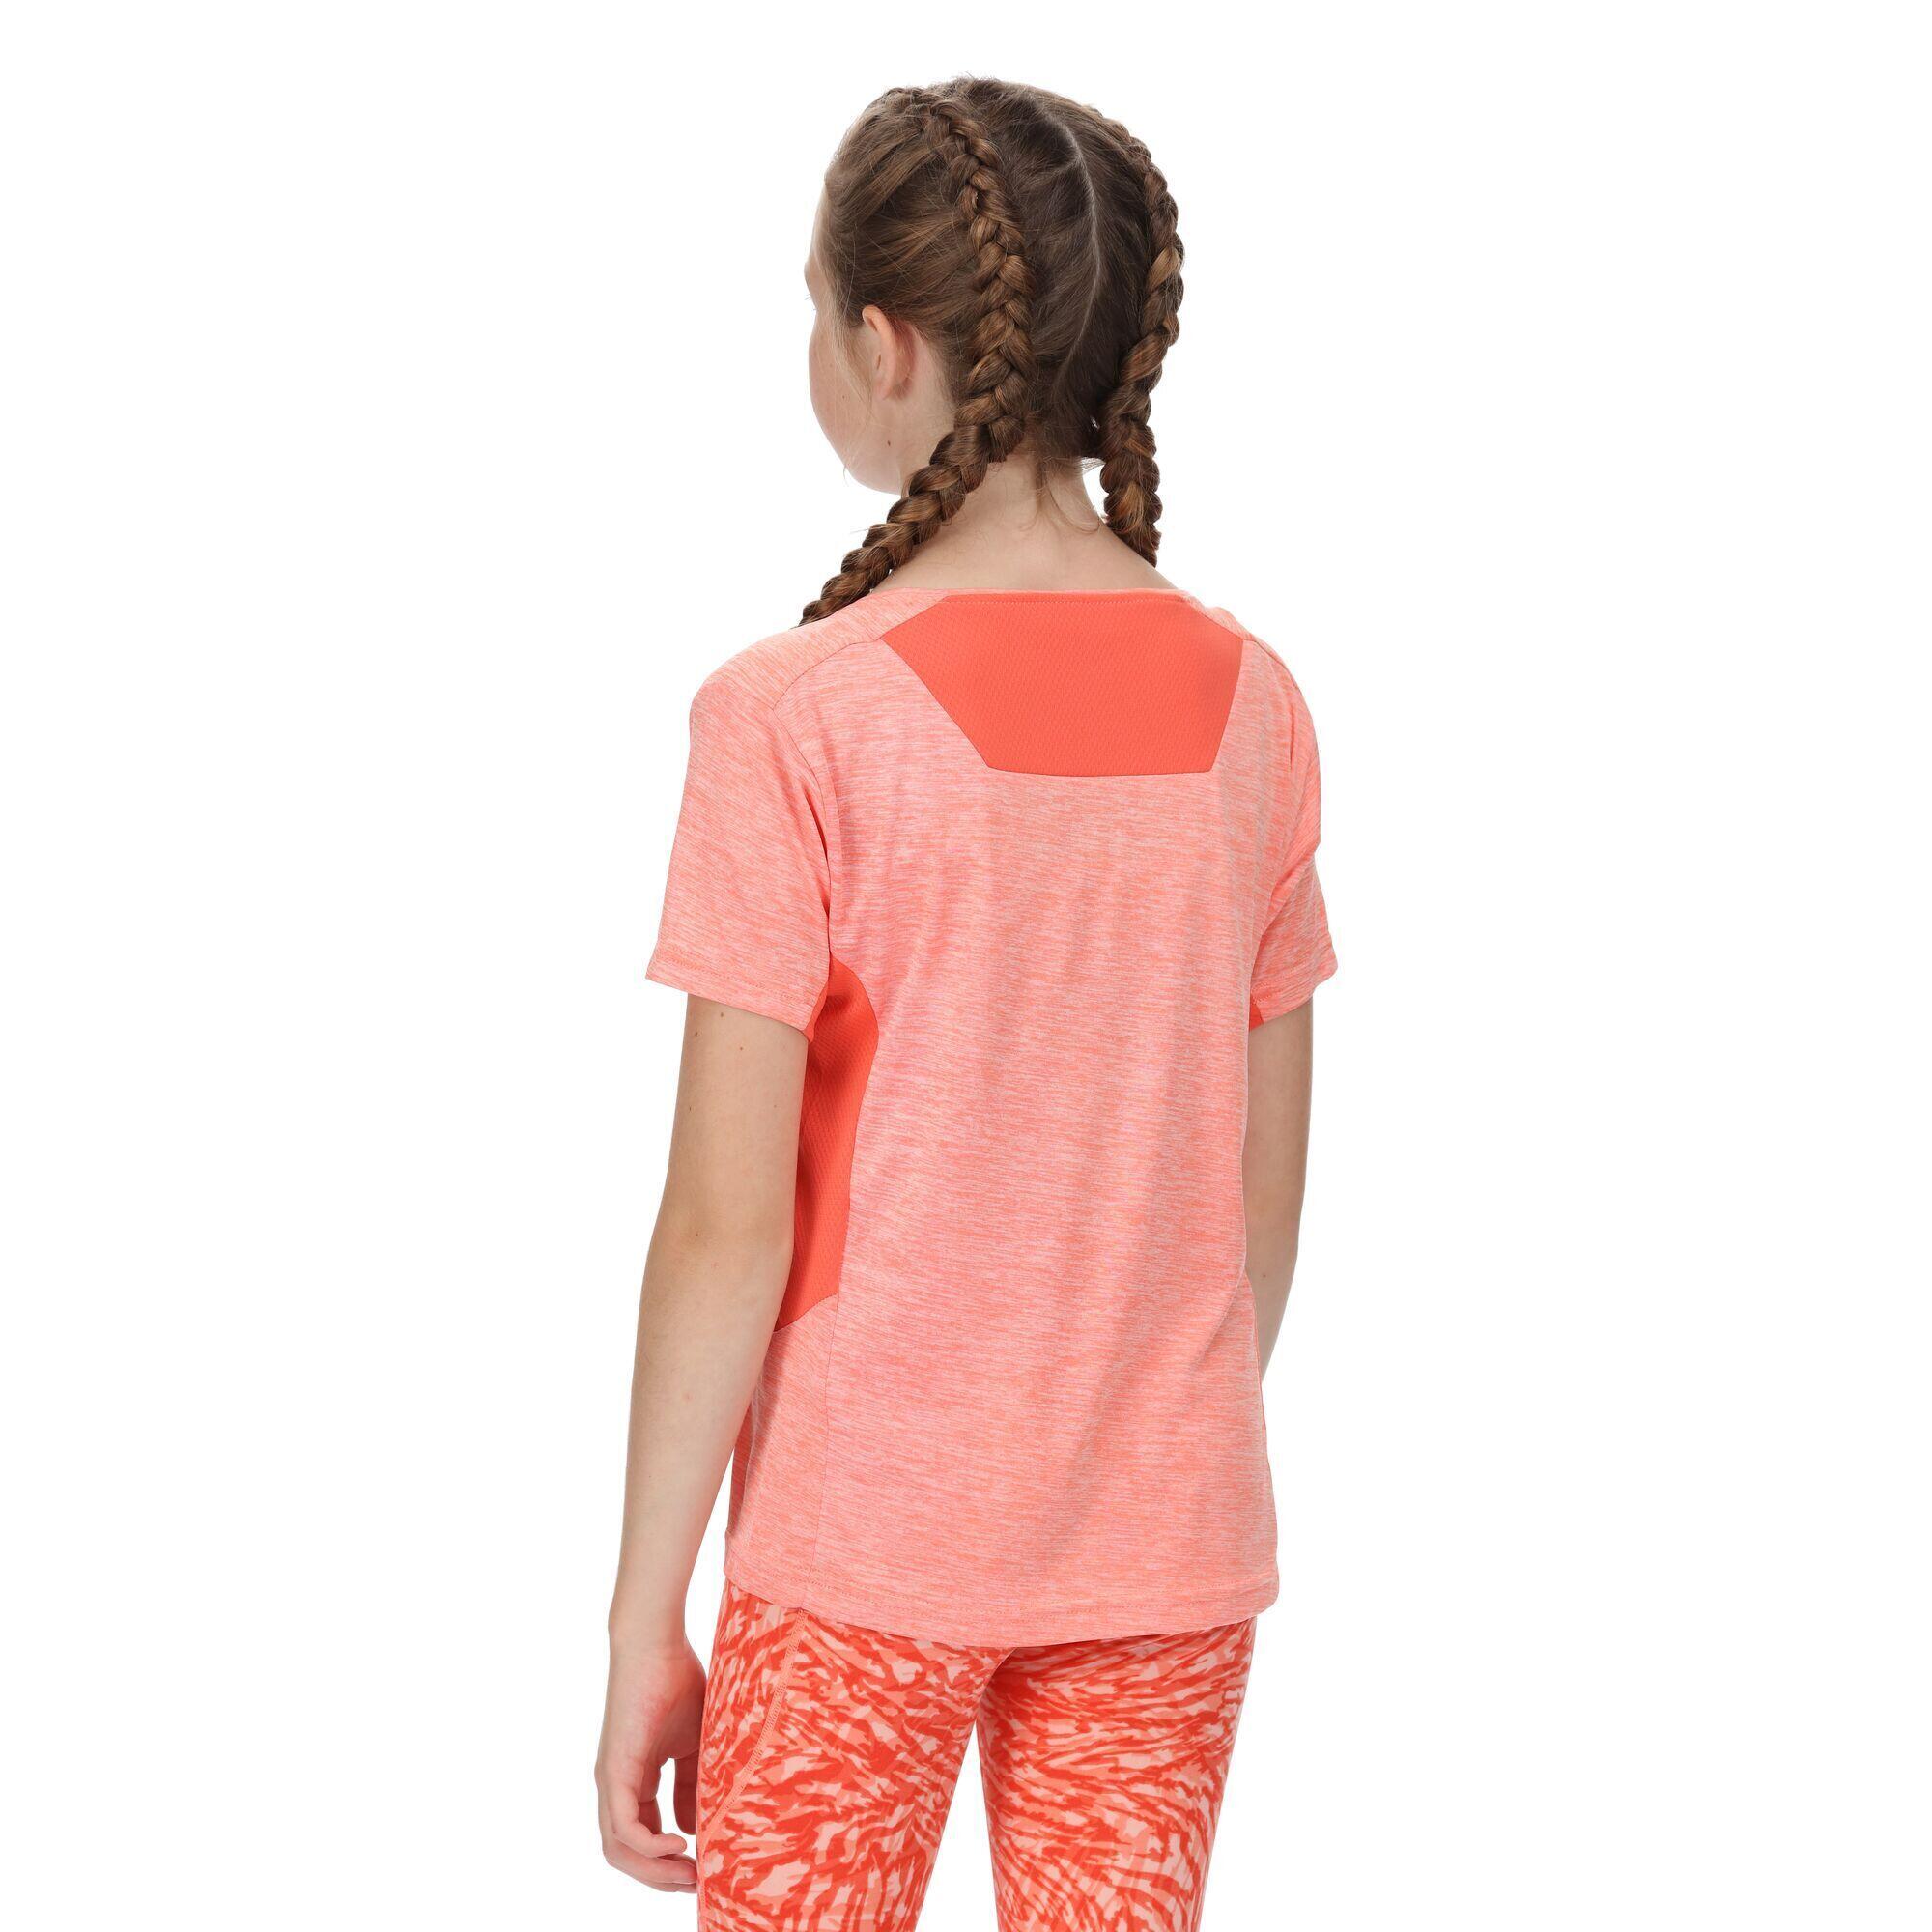 Childrens/Kids Takson III Marl TShirt (Fusion Coral/Neon Peach Marl) 4/5